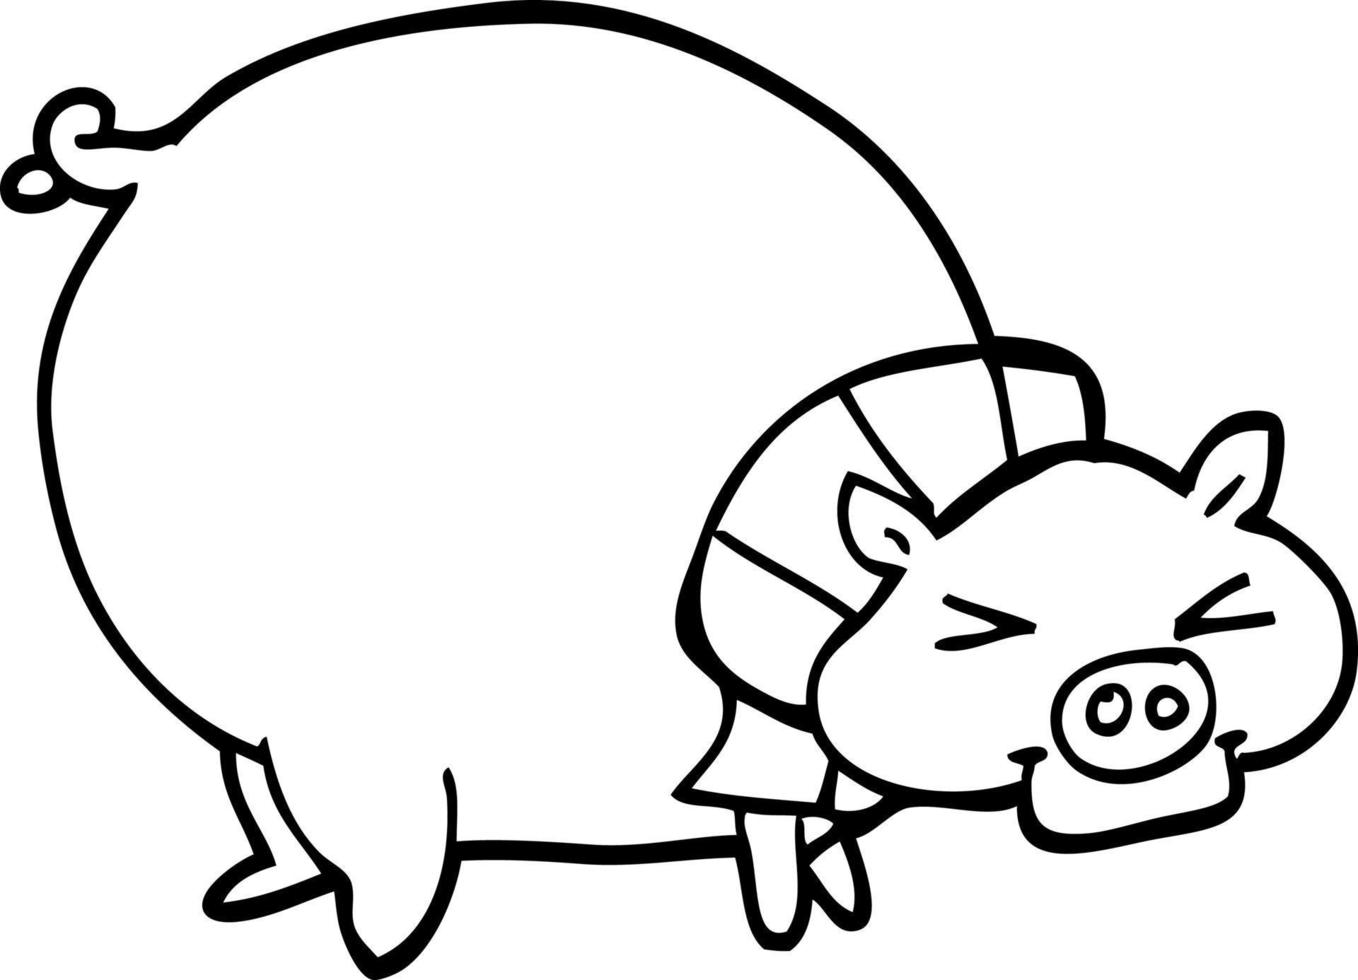 cerdo gordo de dibujos animados de dibujo lineal vector